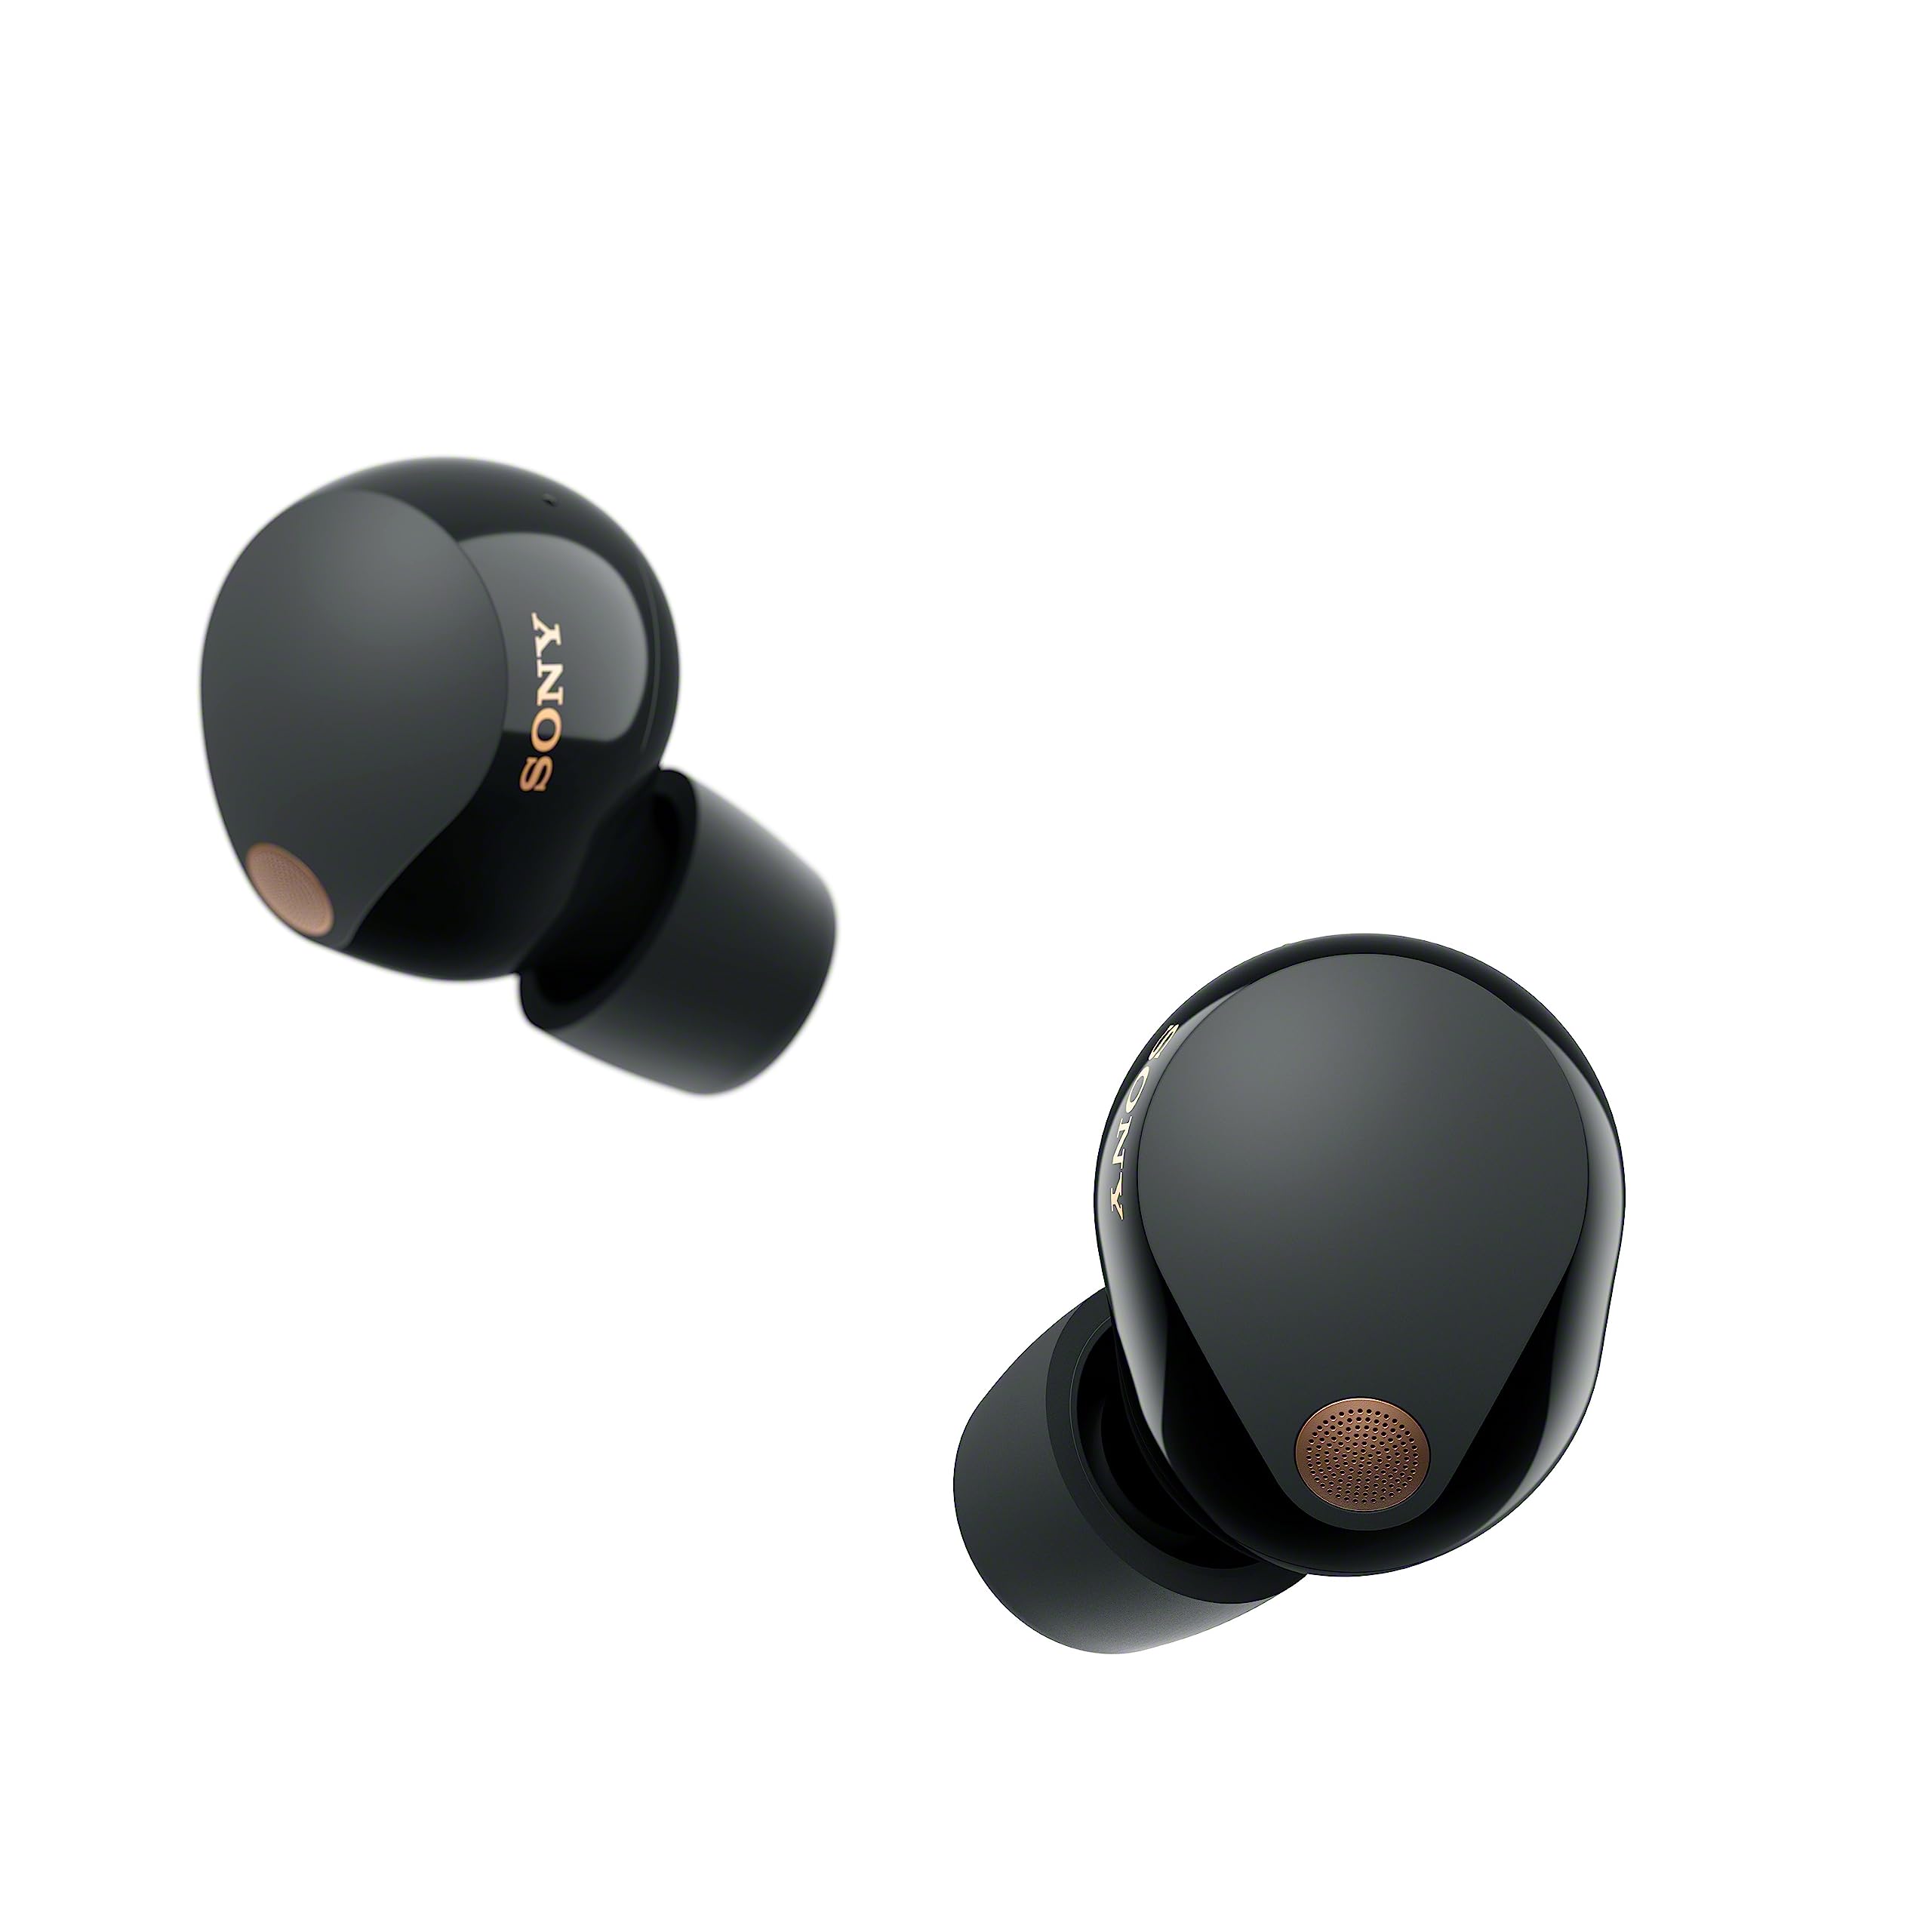 Sony WF-1000XM5 ear buds black 223 before tax! $299 list price.